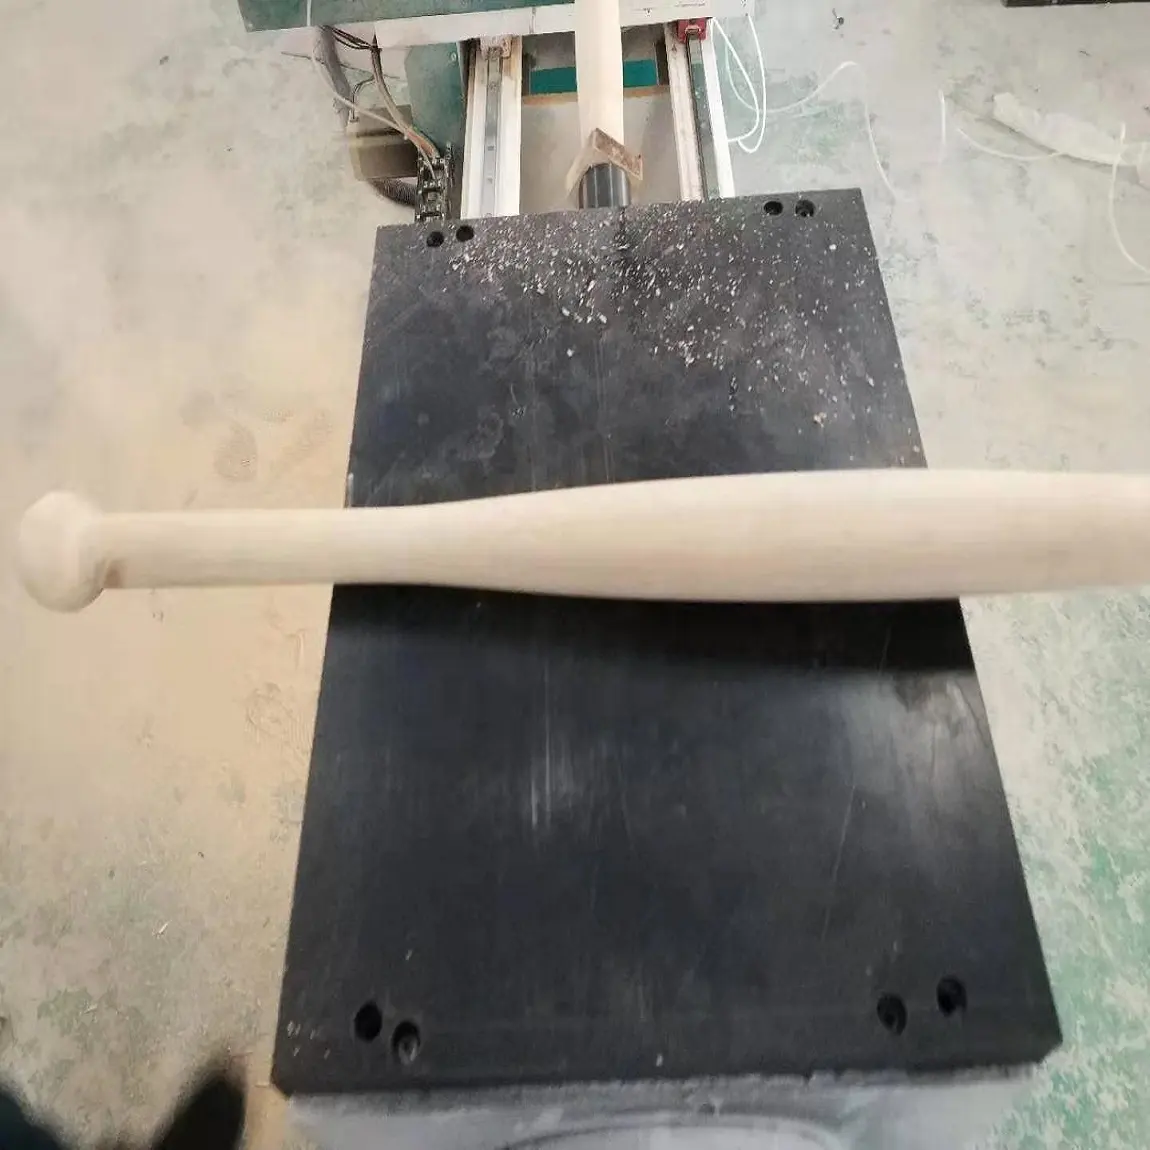 Tianjiao manufacturers sell multifunctional Baseball bat cnc wood turning lathe